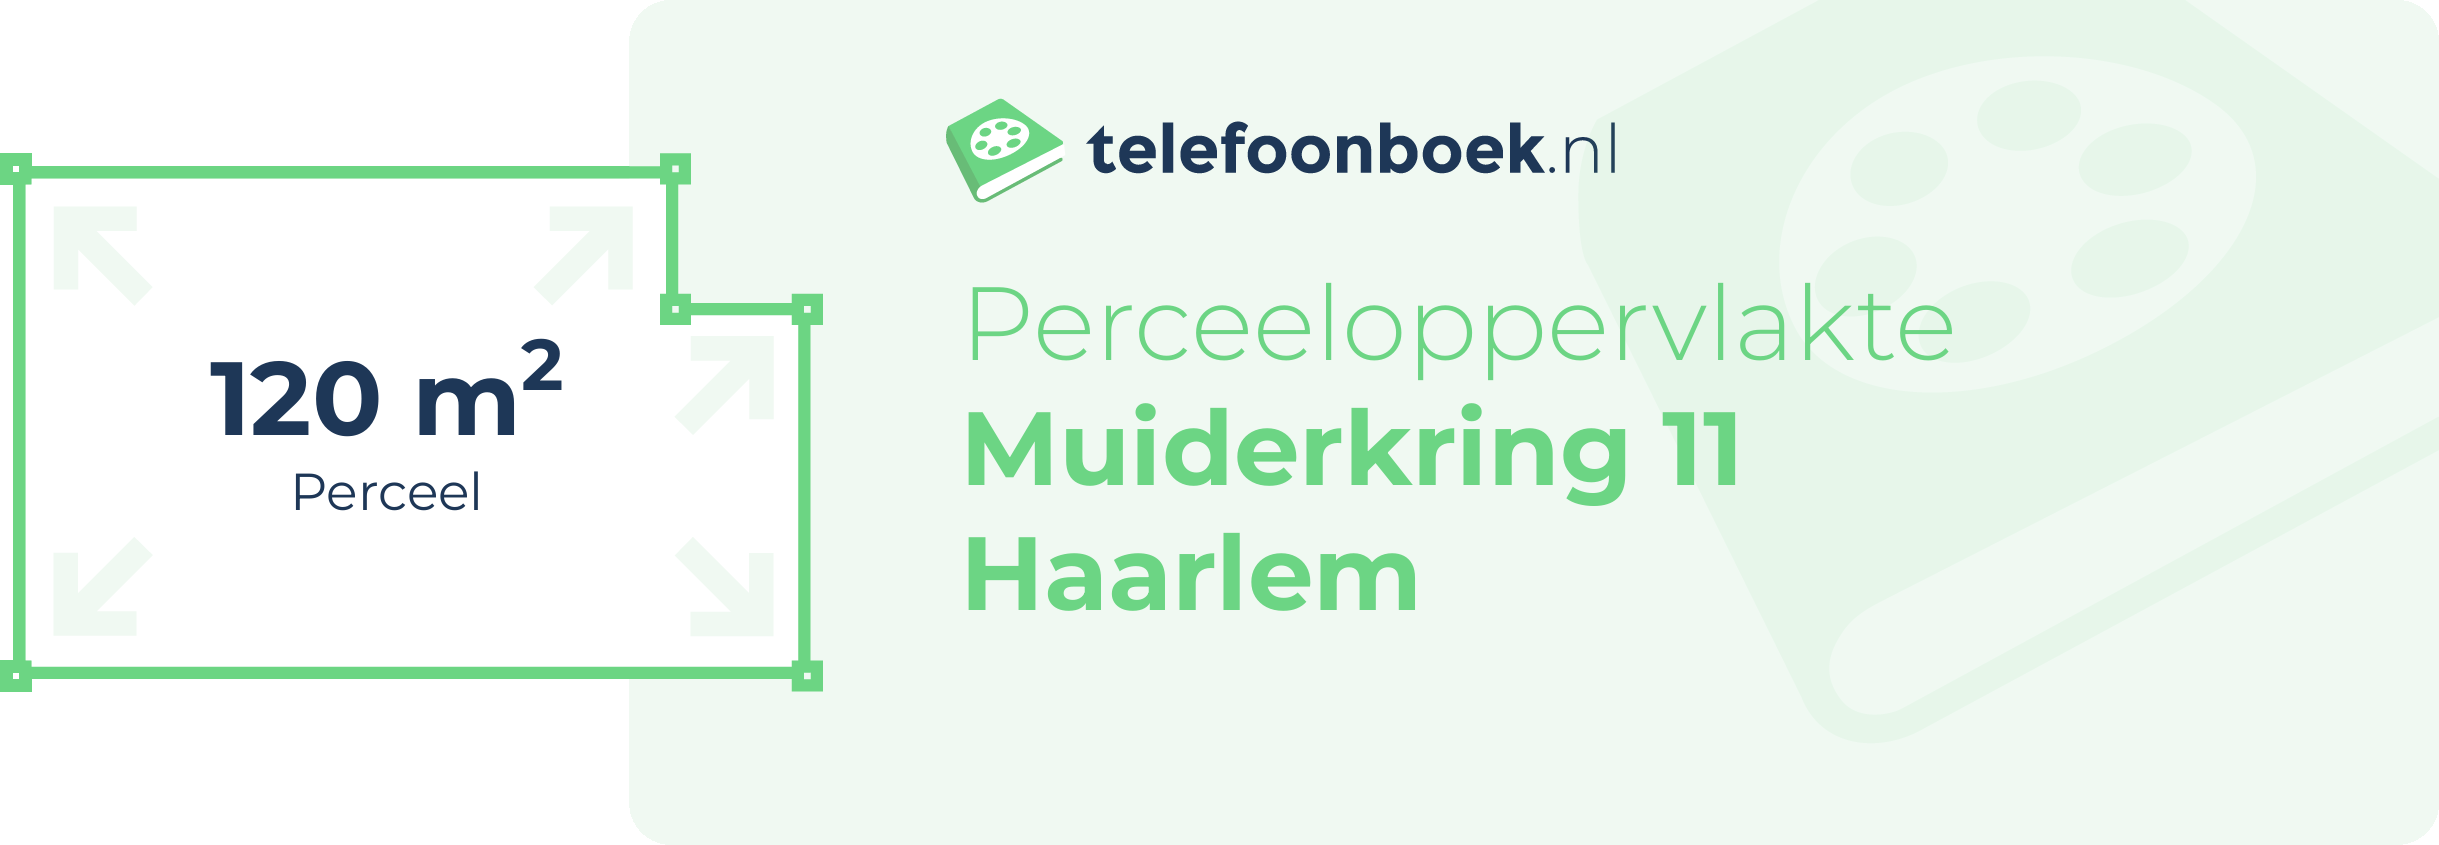 Perceeloppervlakte Muiderkring 11 Haarlem